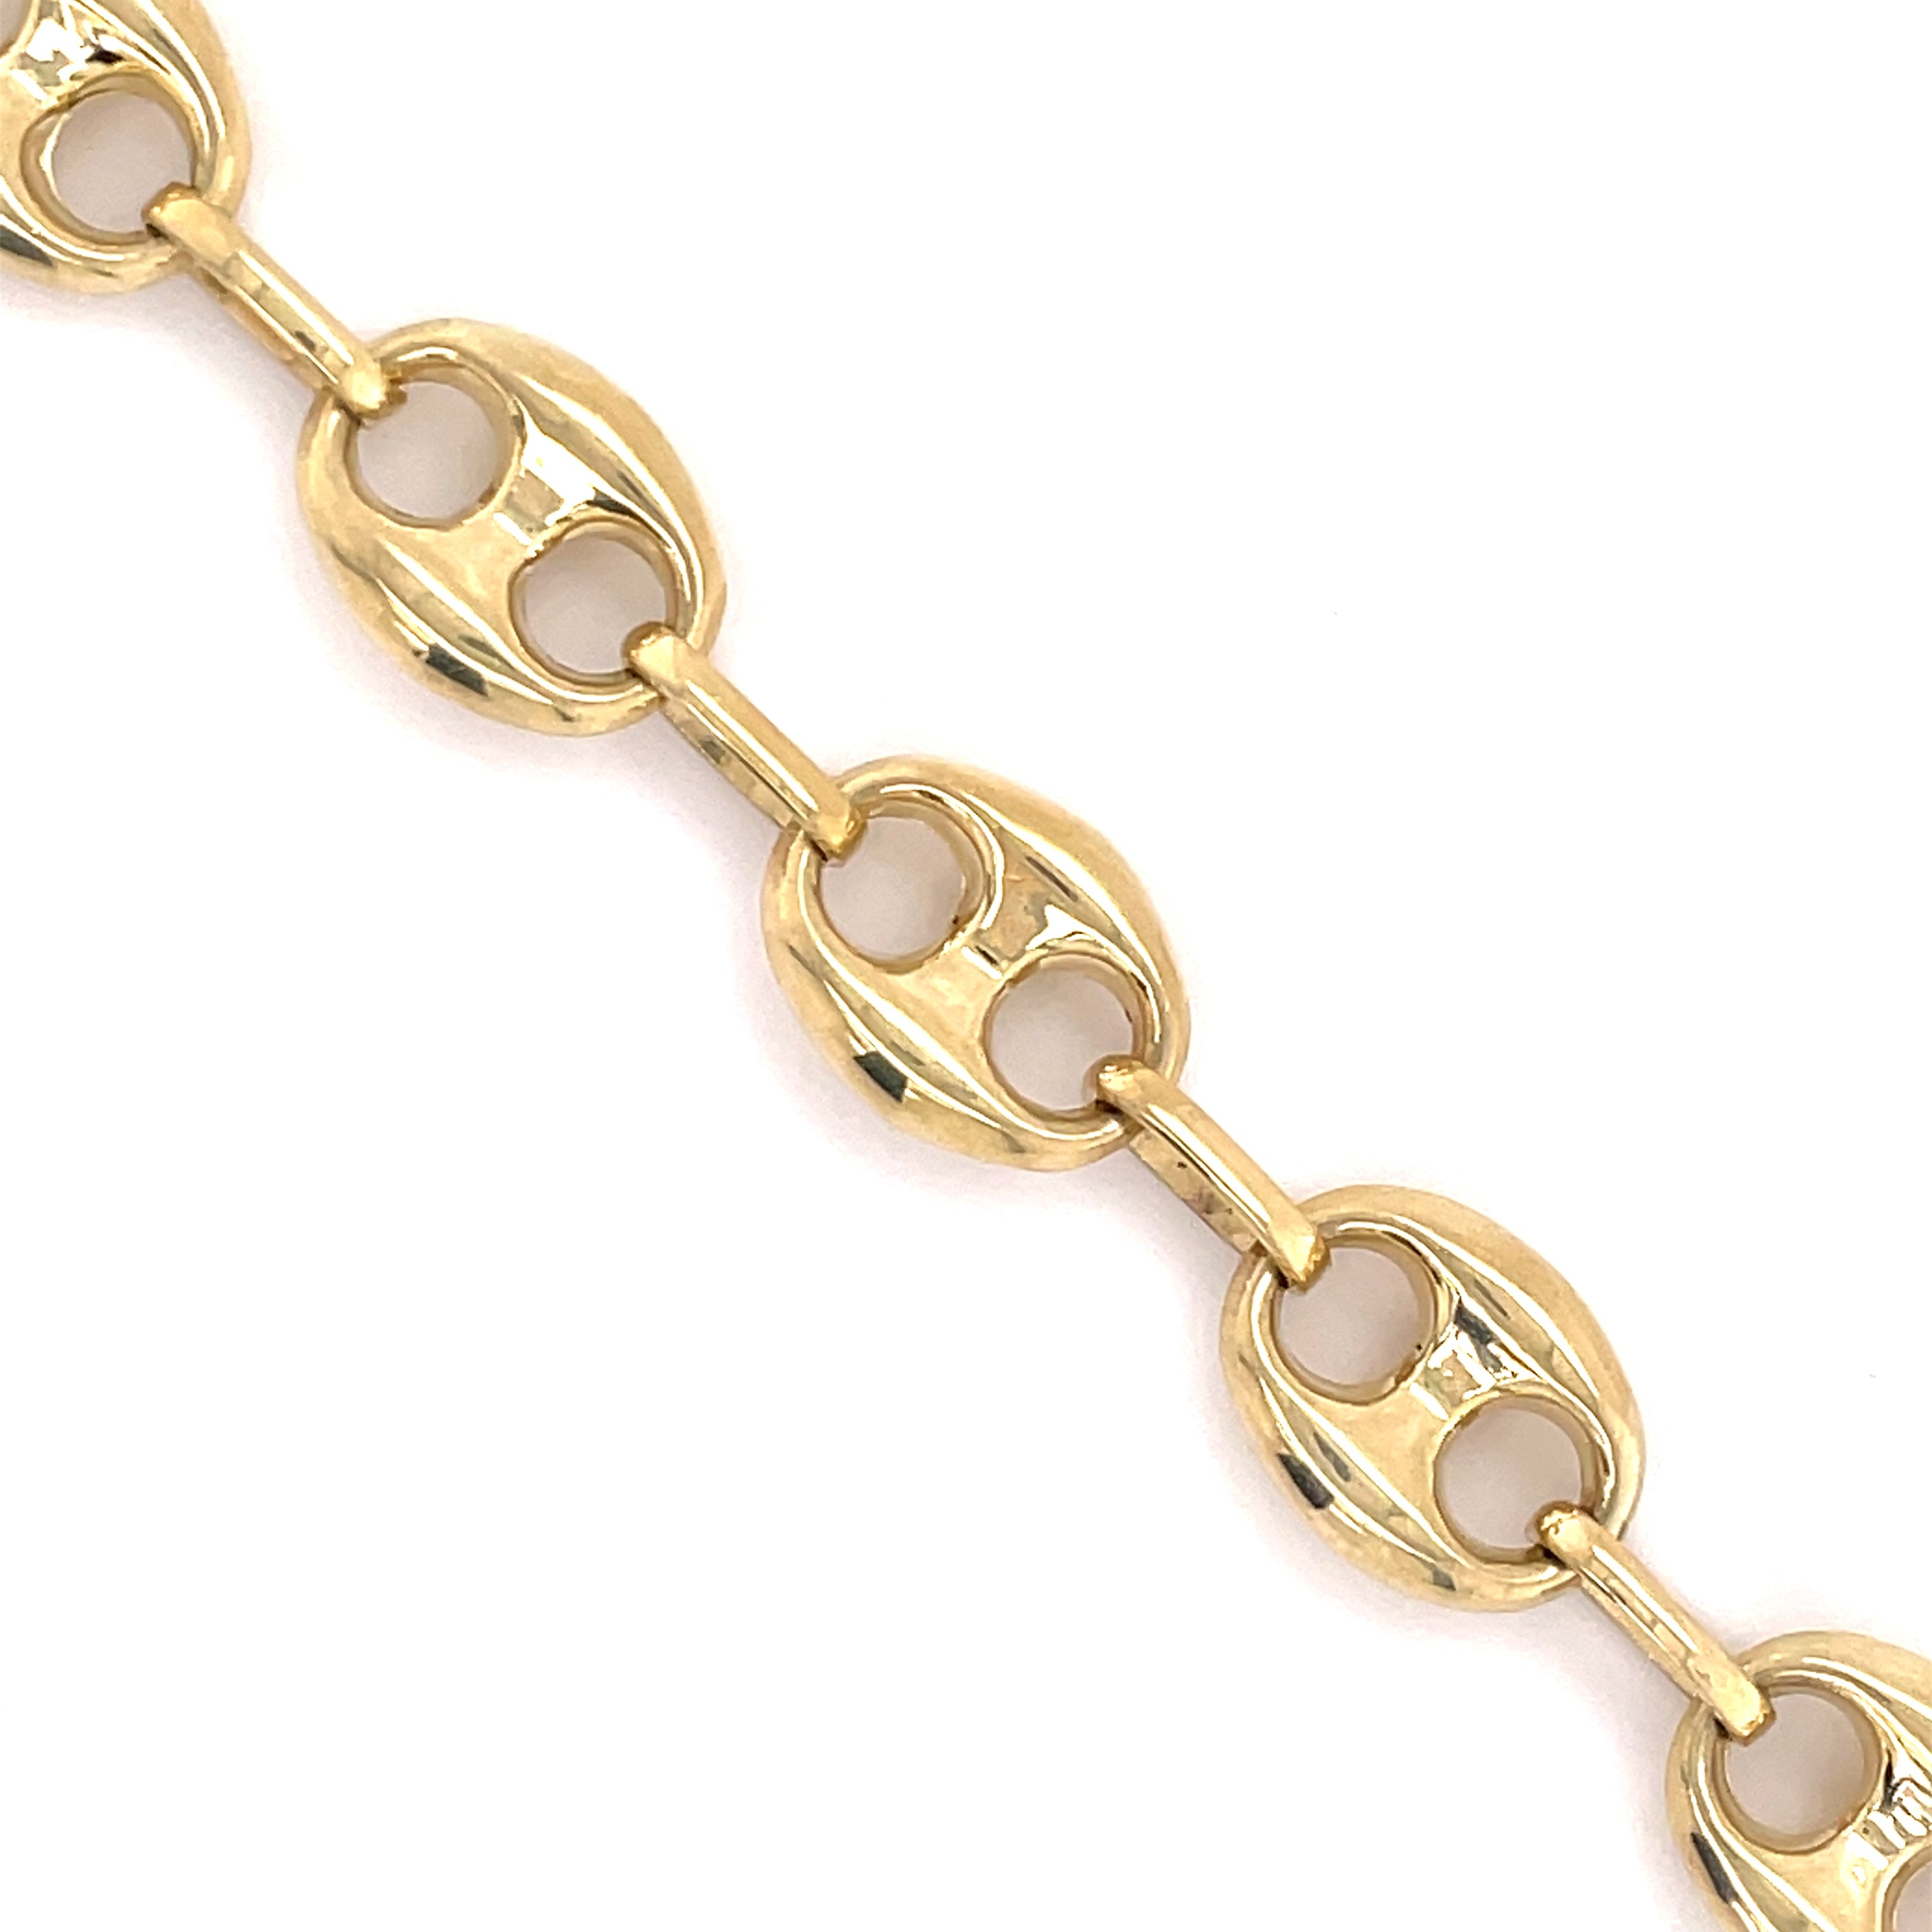 10K Gold Puffed Mariner Link Bracelet (Regular) - 10.0MM - White Carat - USA & Canada